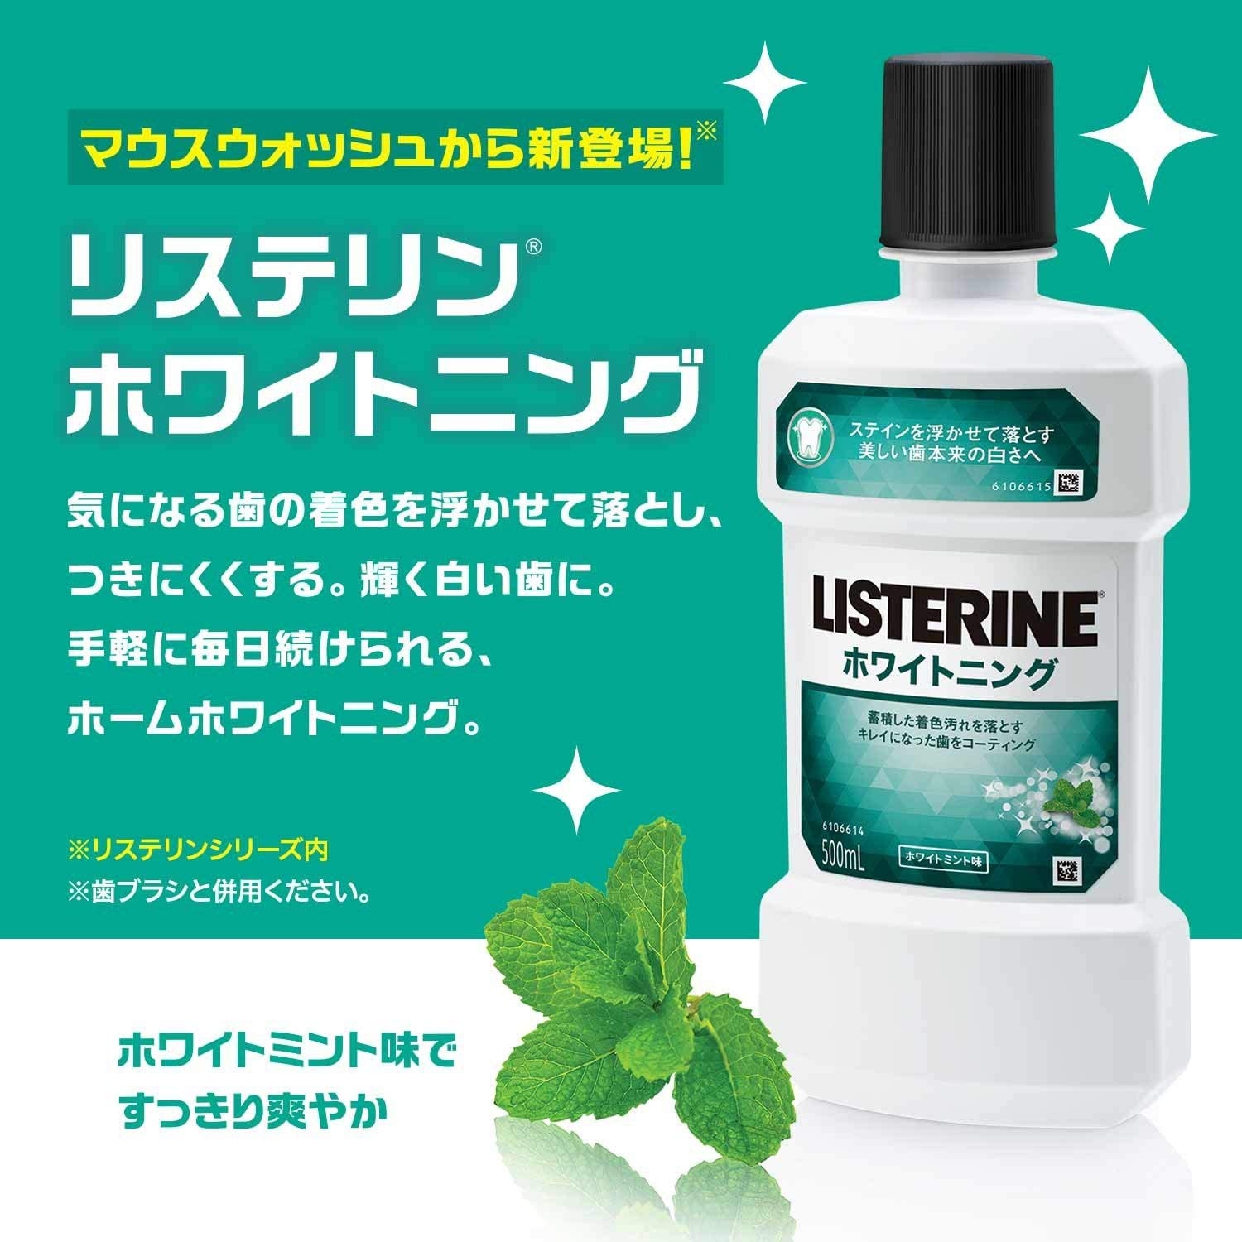 LISTERINE(リステリン) ホワイトニングの商品画像サムネ5 